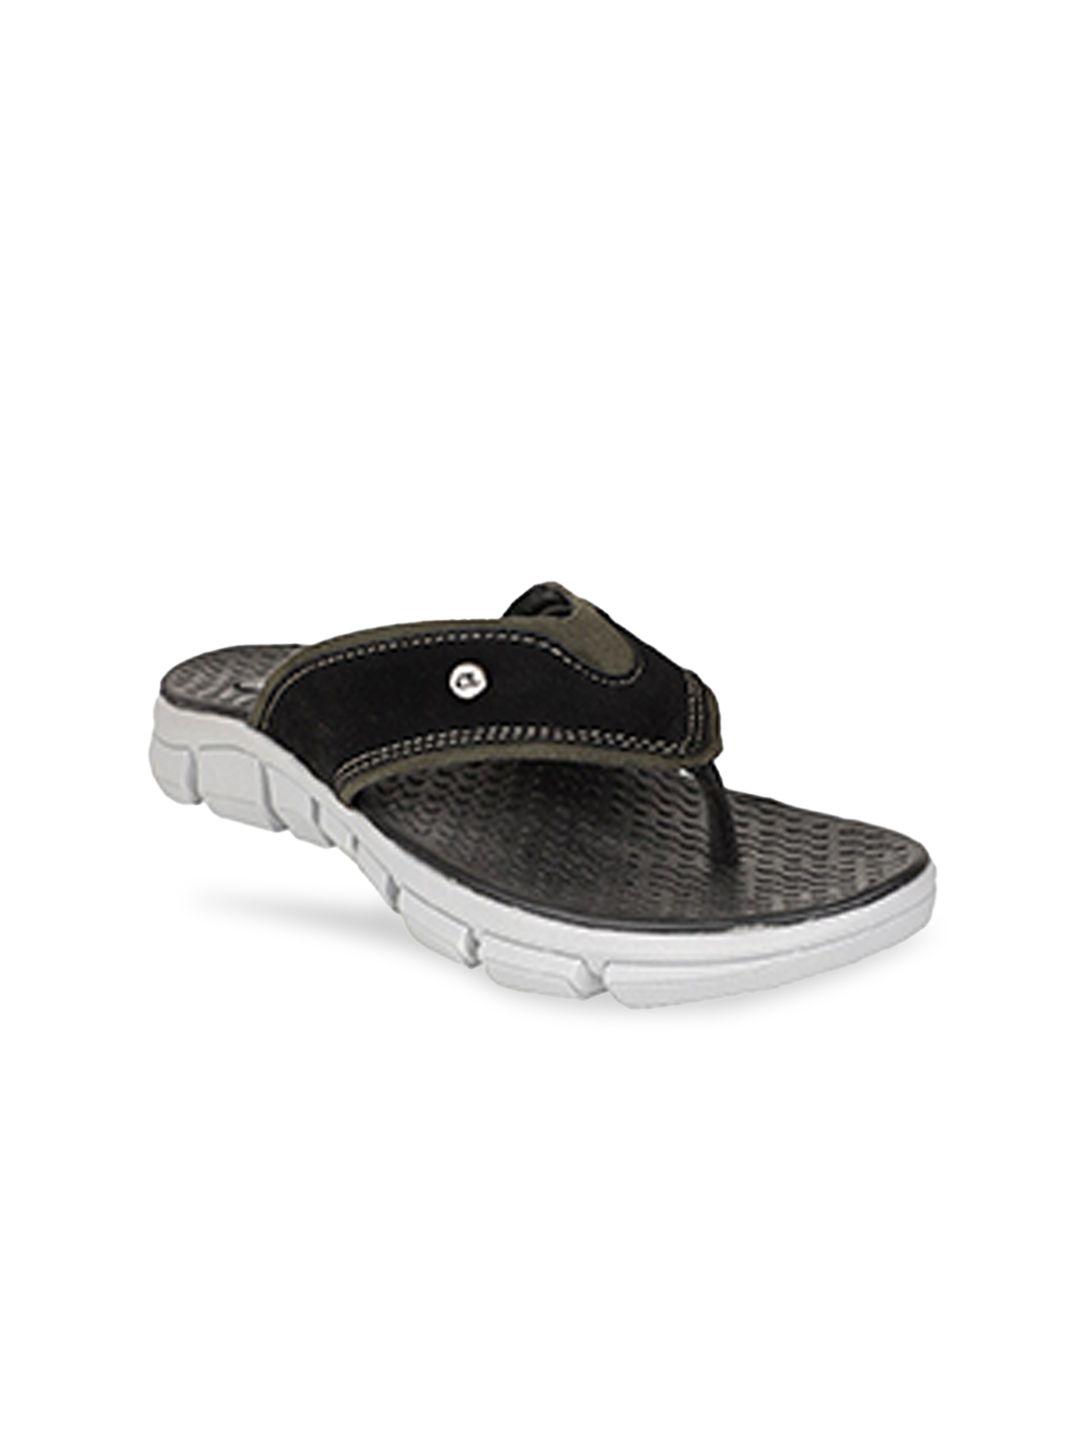 carlton-london-men-olive-&-black-casual-comfort-sandals